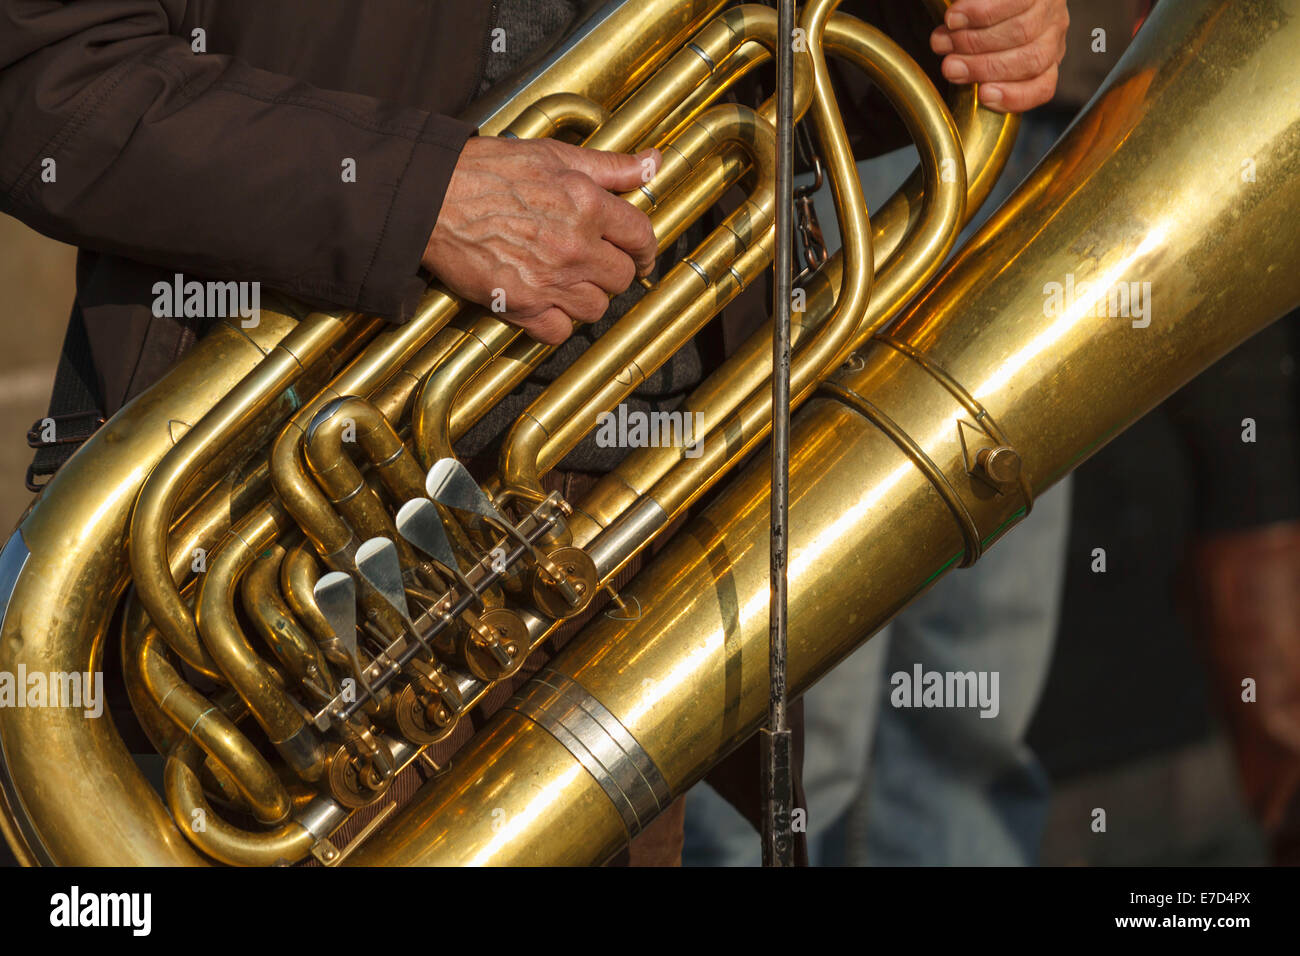 street performer musician detail tuba brass wind instrument Stock Photo